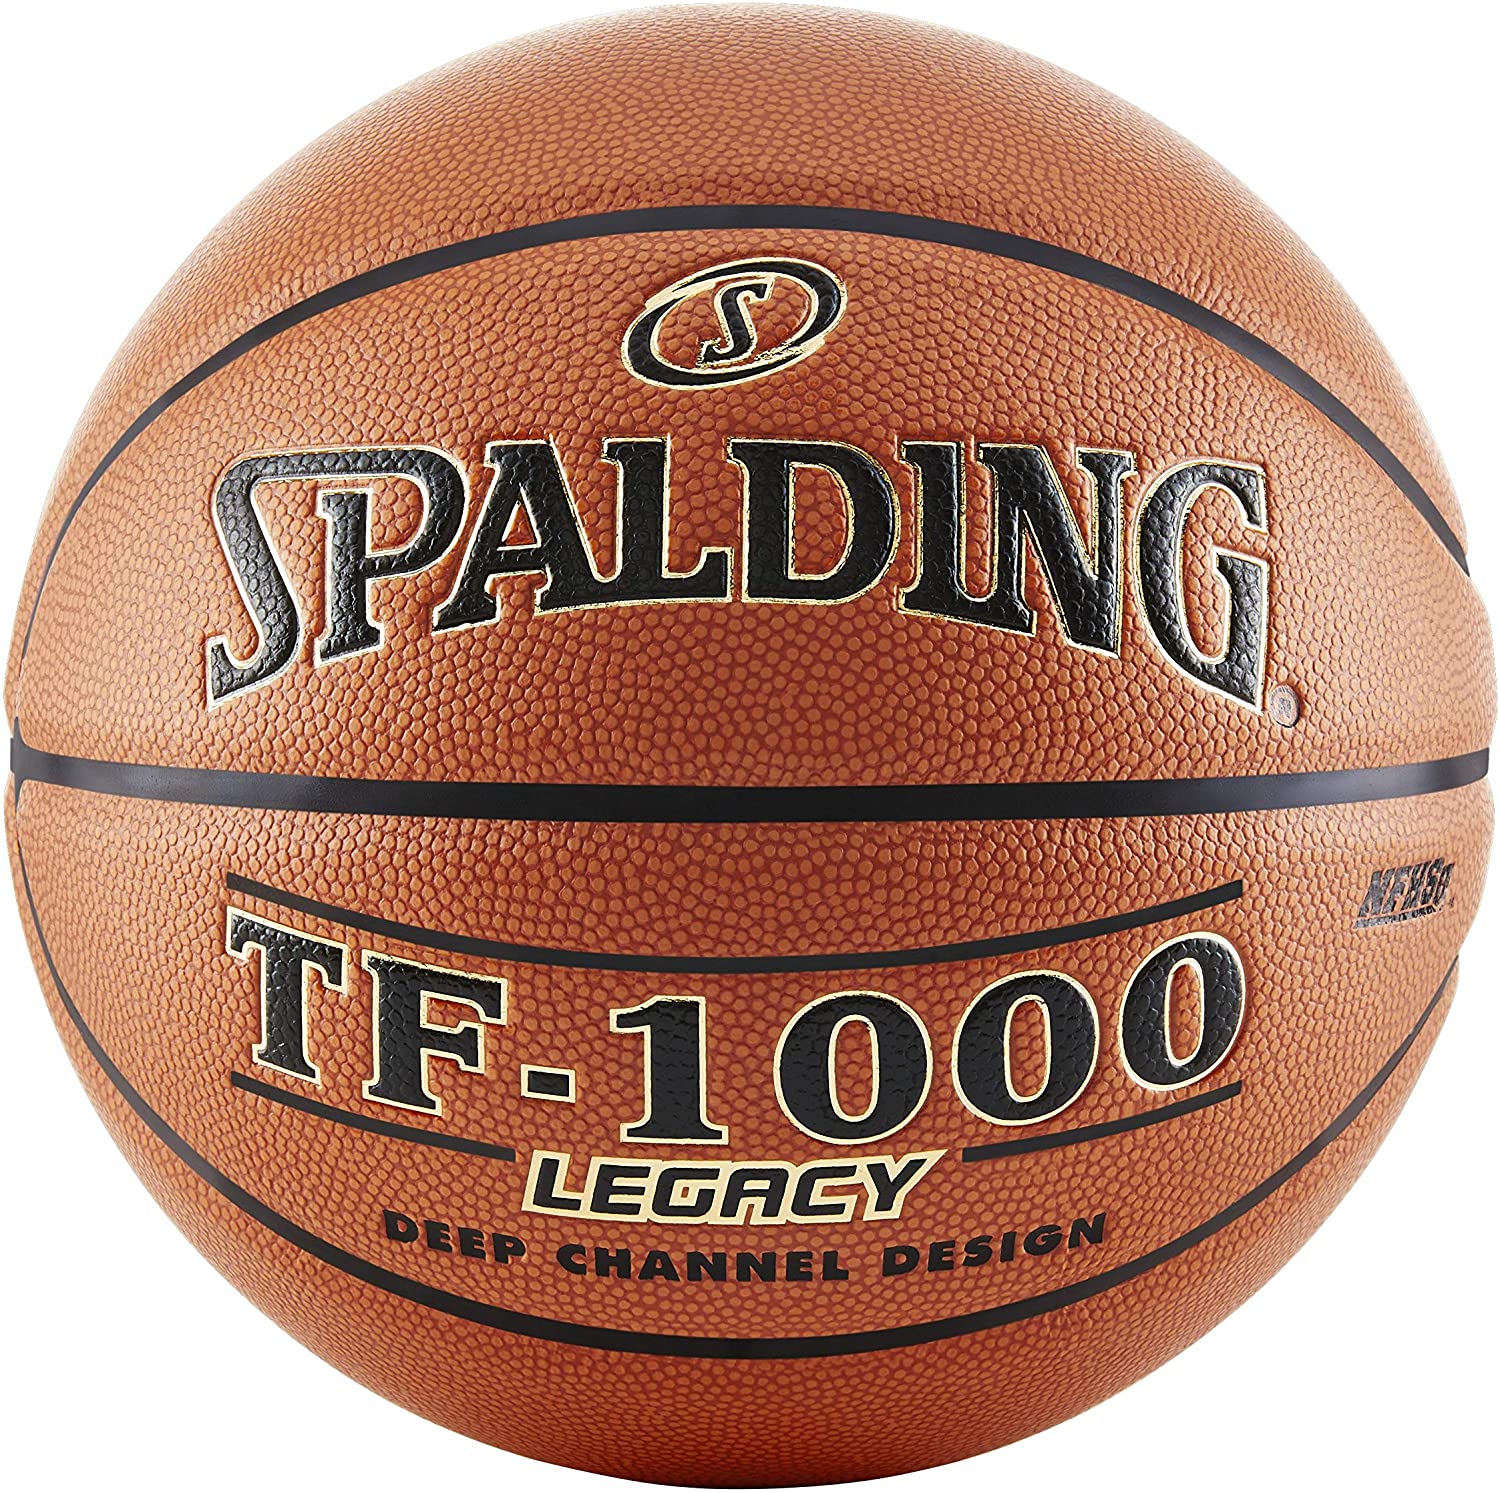 Spalding Legacy TF-1000